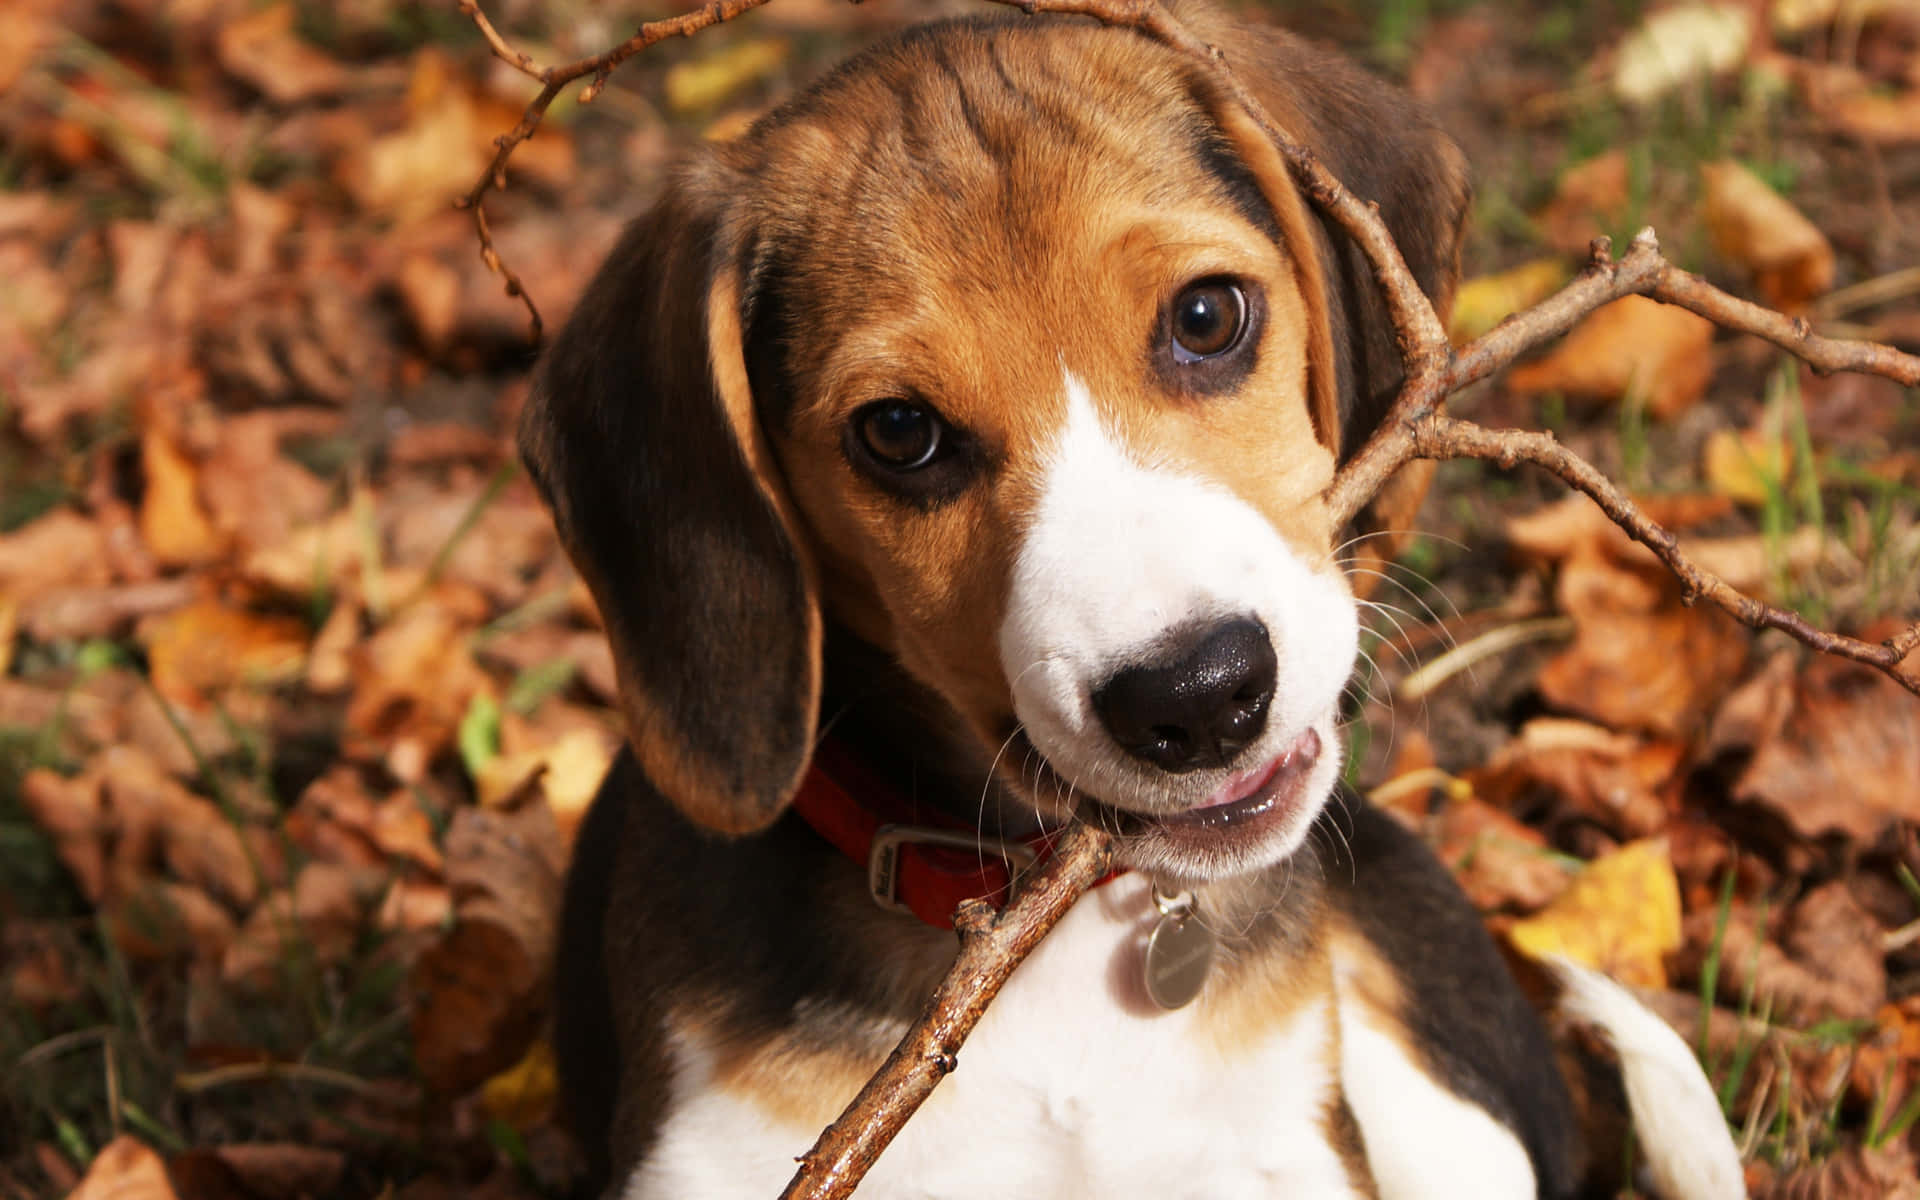 “Enjoying the beautiful outdoors with a playful Beagle”